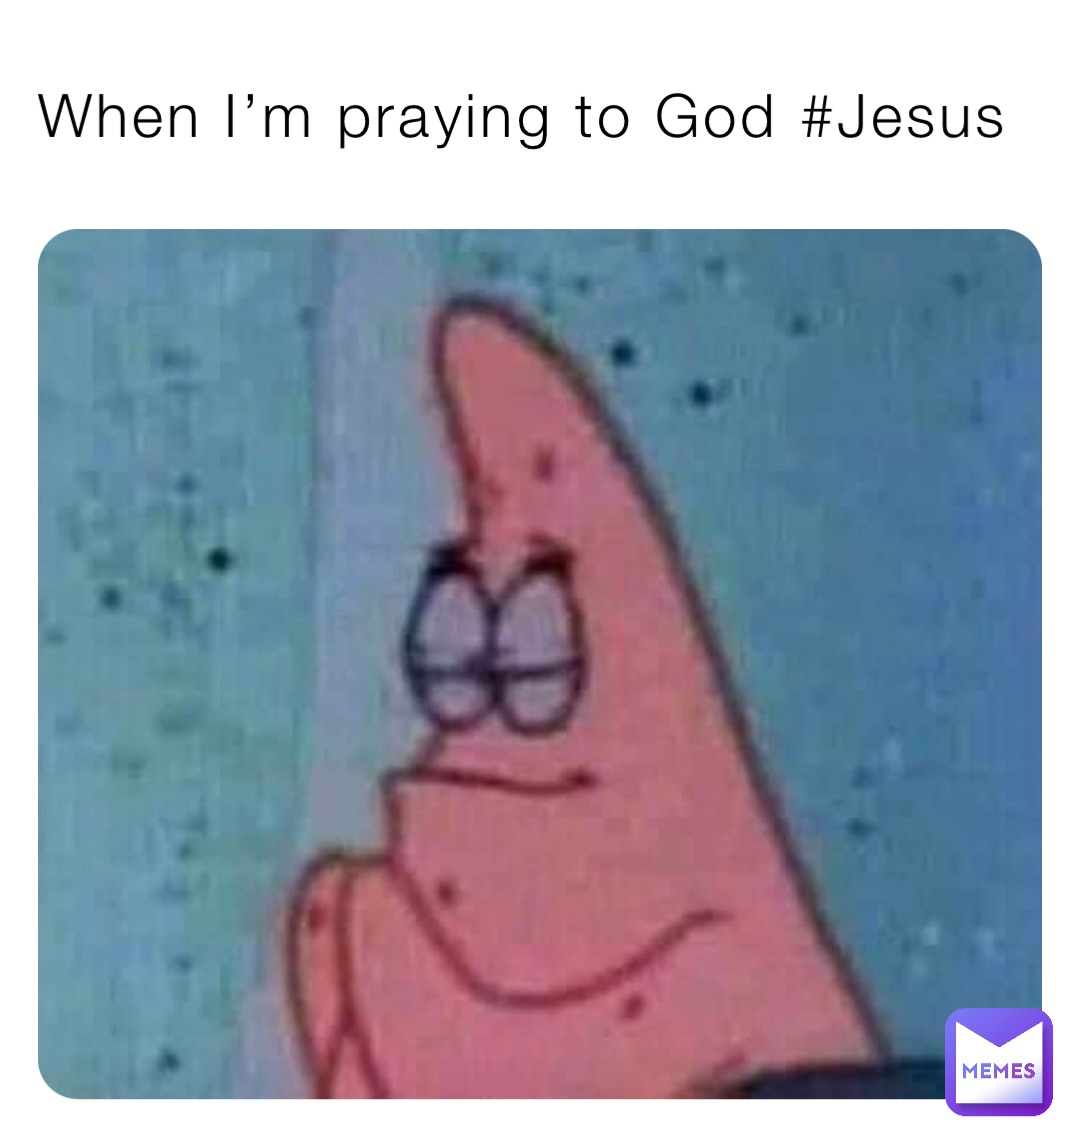 When I’m praying to God #Jesus